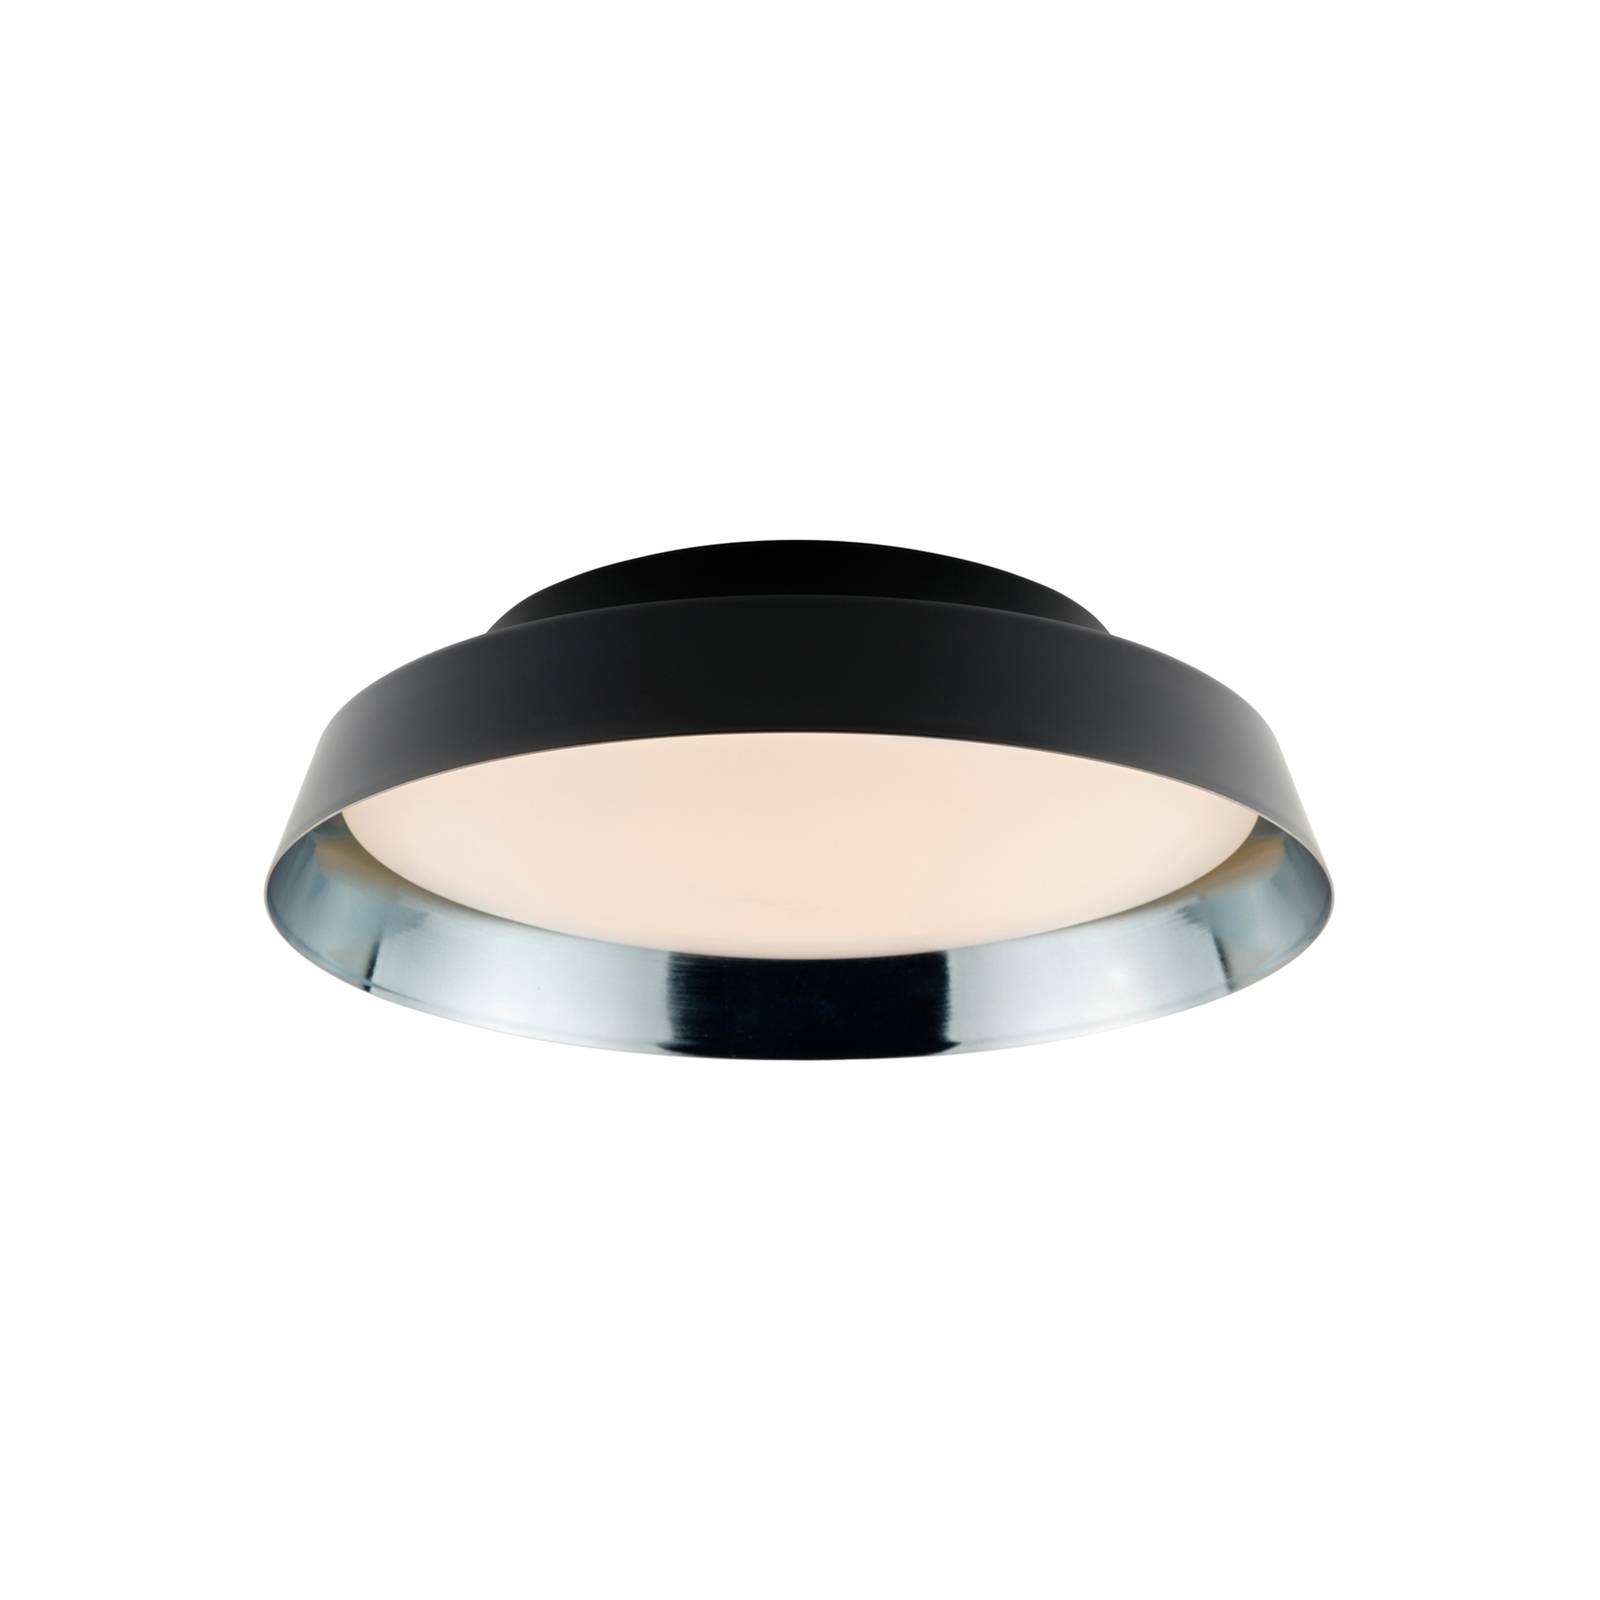 Carpyen Boop! LED-loftlampe Ø54cm sort/blå-grå